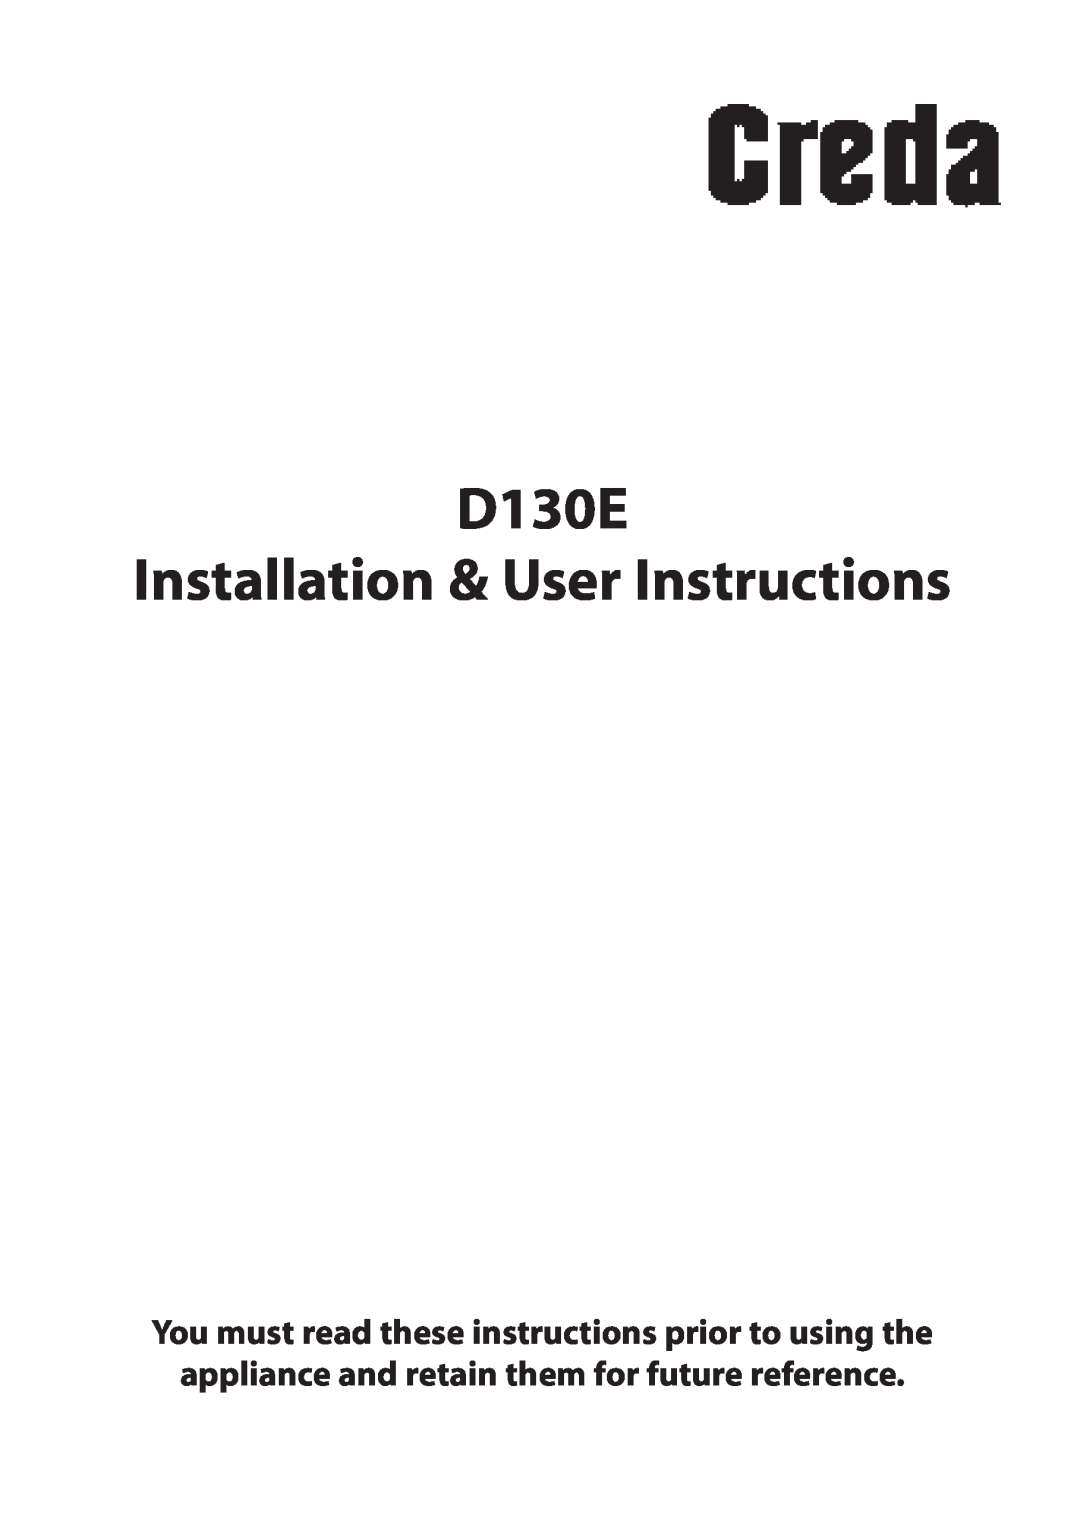 Creda manual D130E Installation & User Instructions 